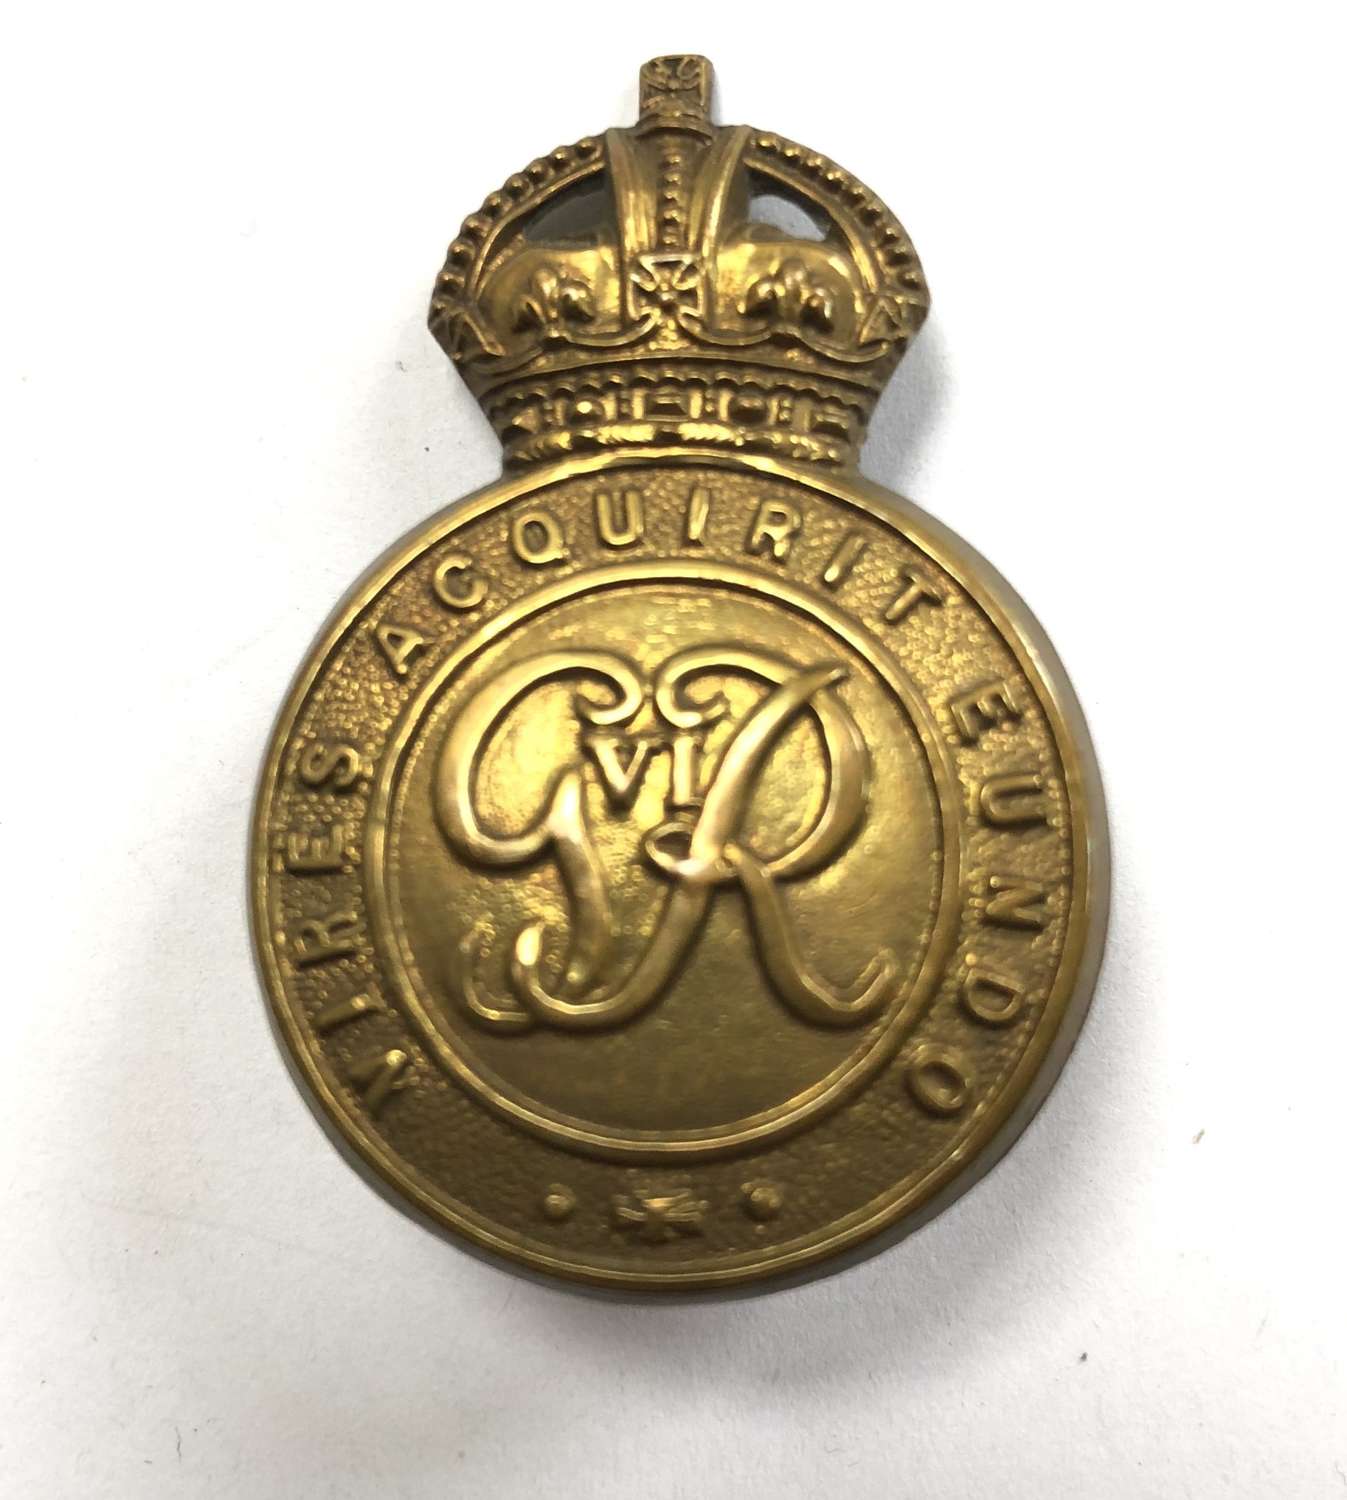 Royal Military College, Sandhurst Officer Cadet's cap badge c1937-52